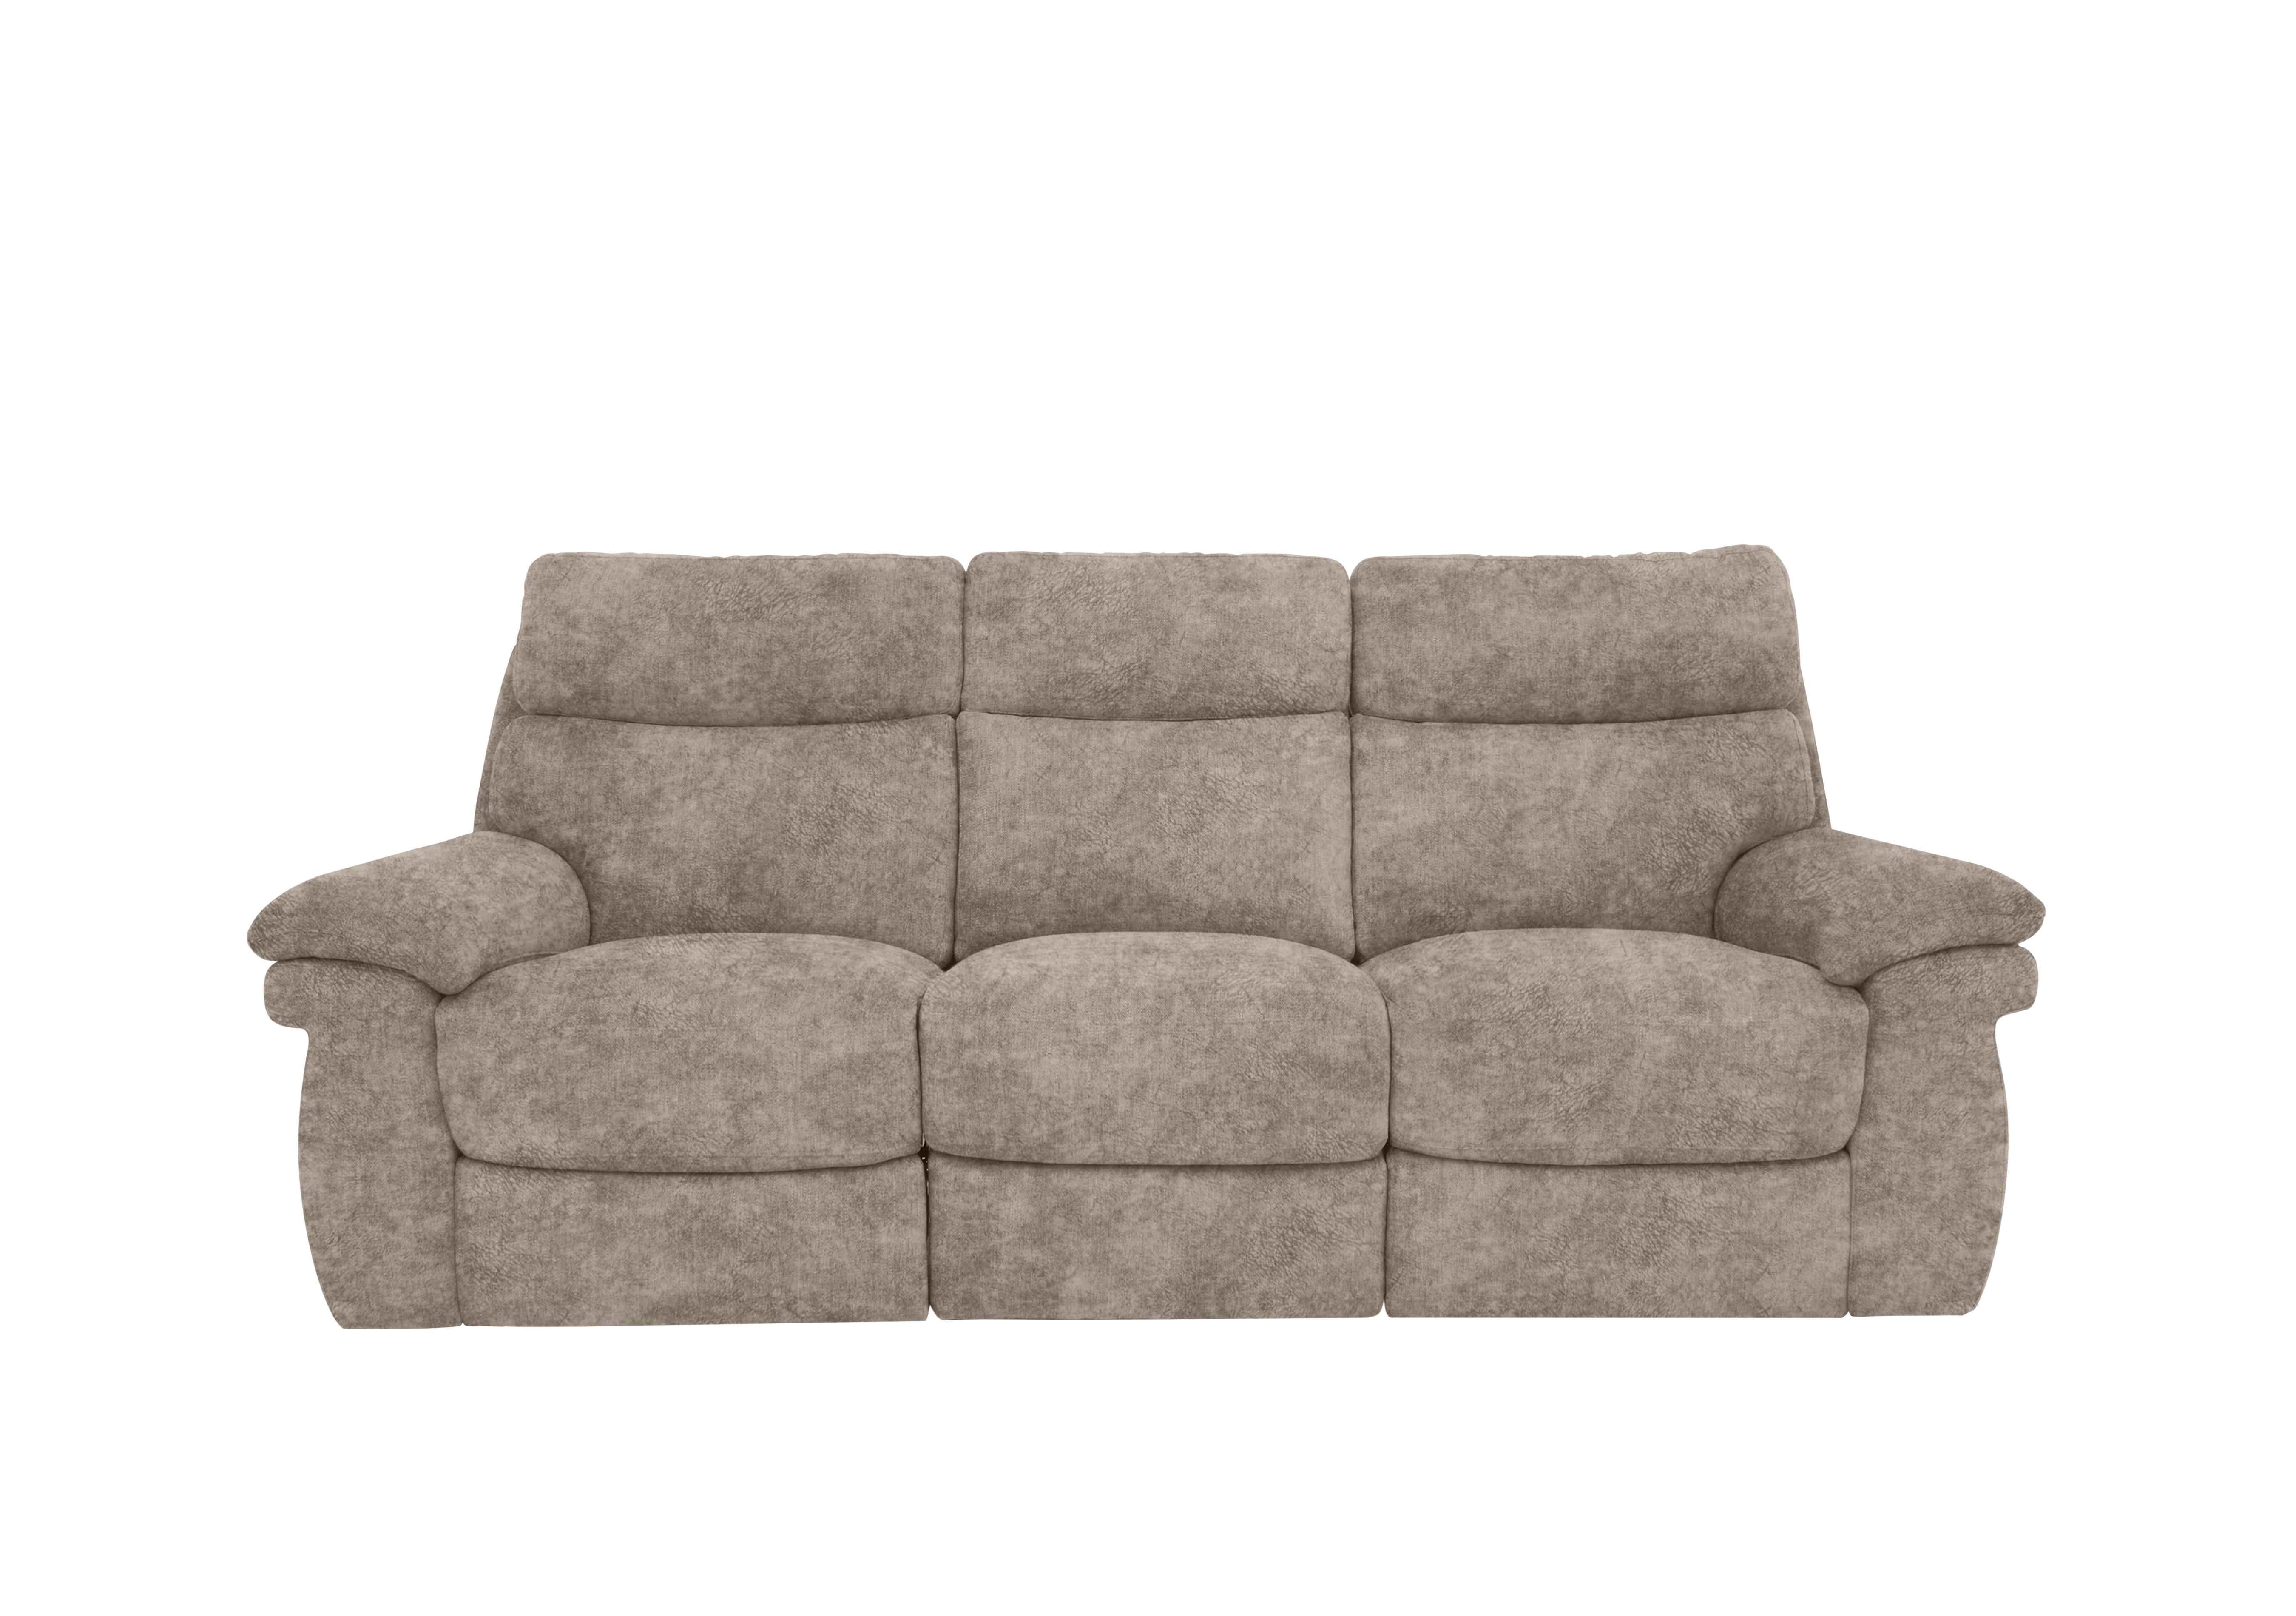 Serene 3 Seater Fabric Power Recliner Sofa with Power Headrests in Bfa-Bnn-R29 Mink on Furniture Village